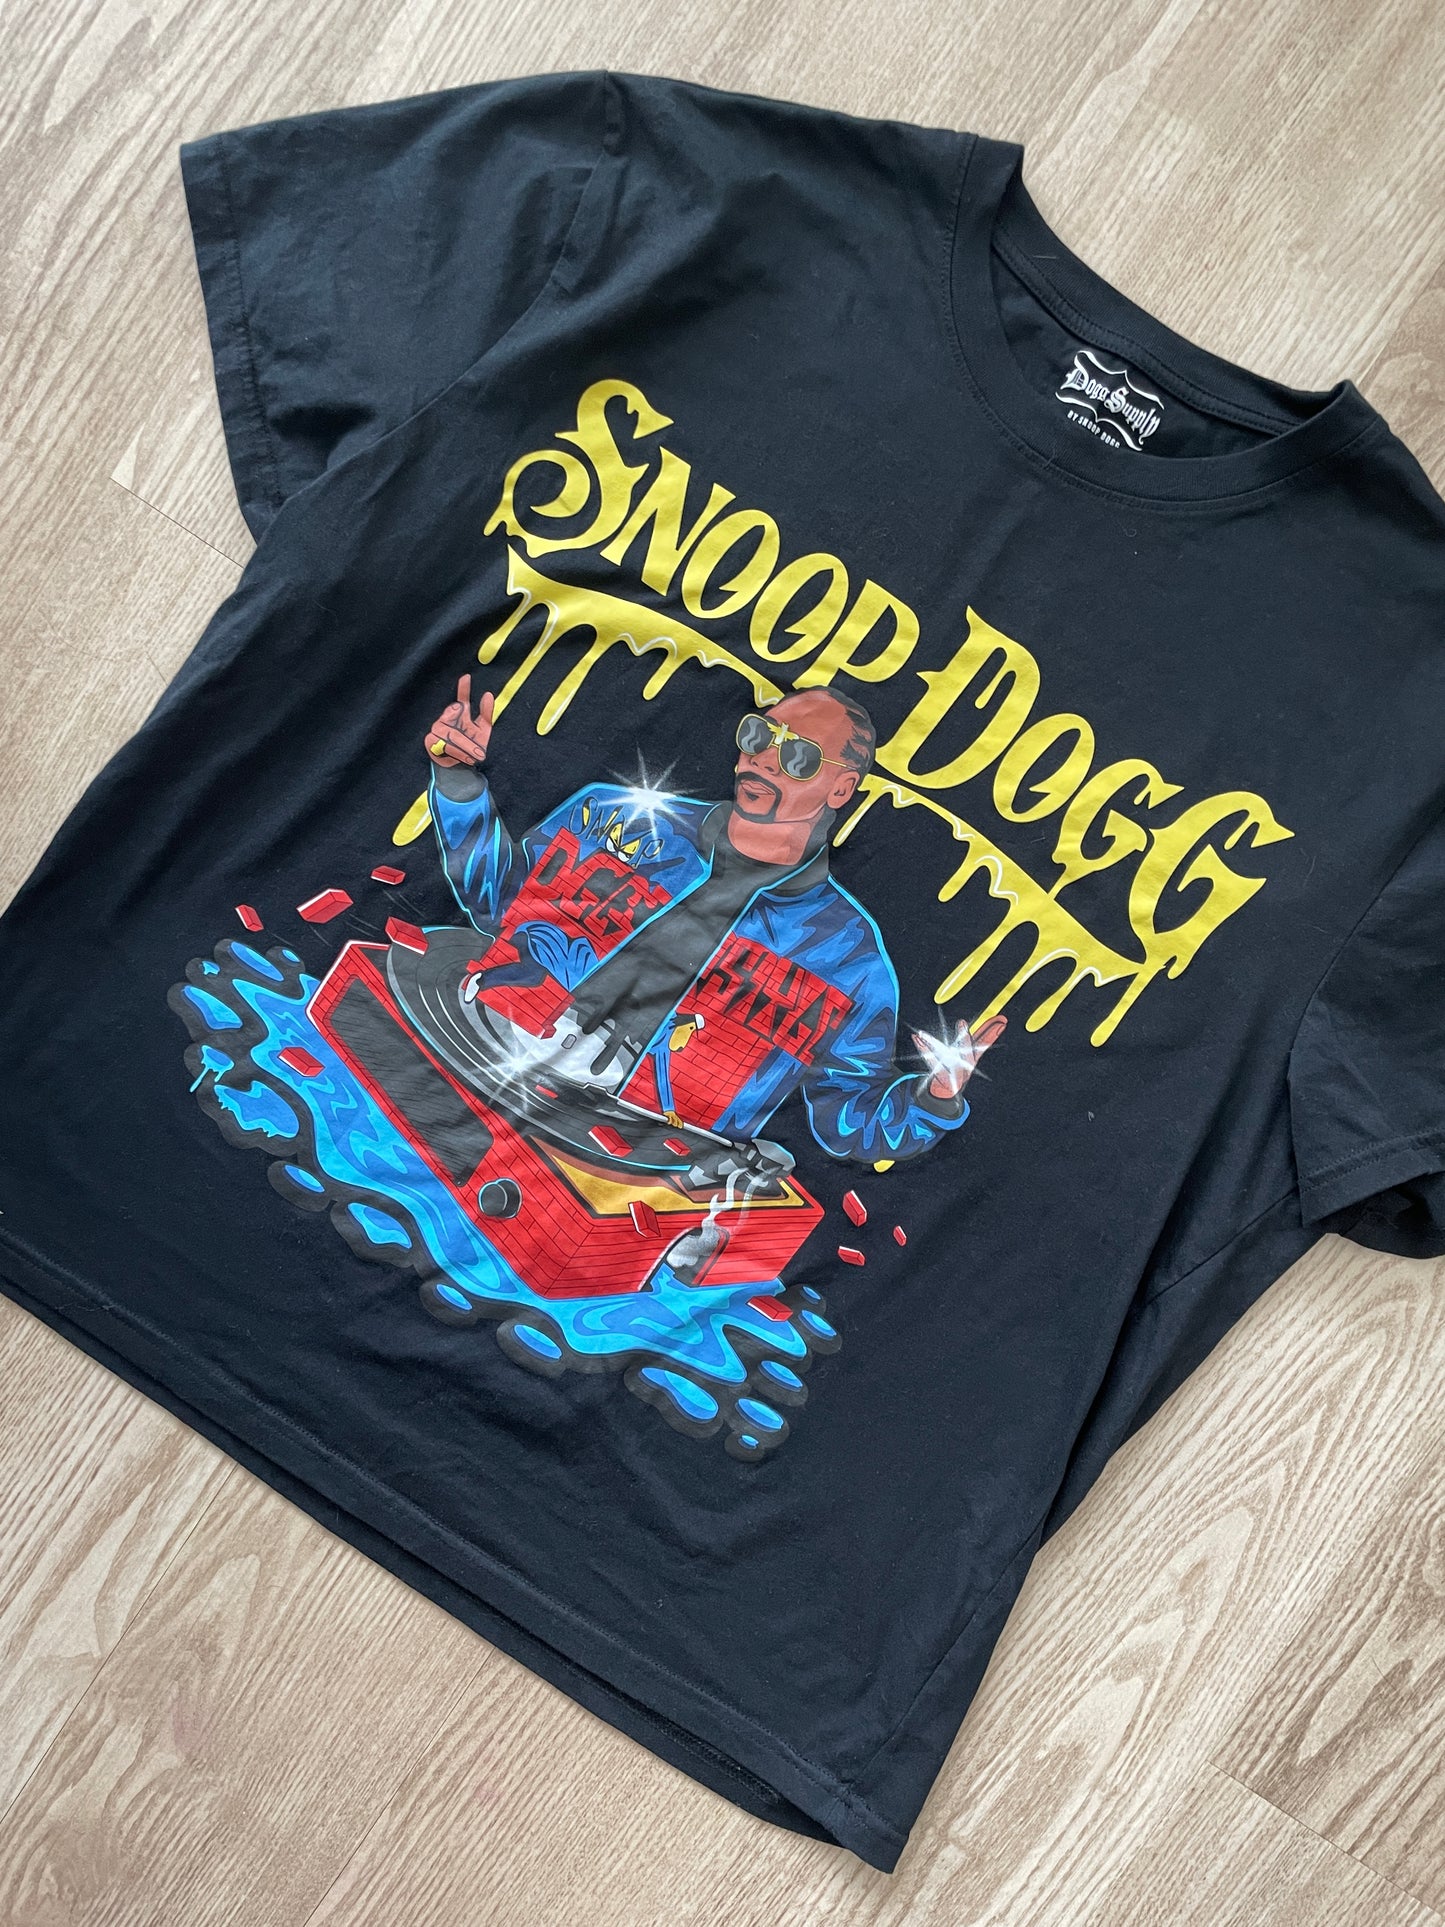 XL Men's Snoop Dogg Short Sleeve T-Shirt | READY TO TIE DYE